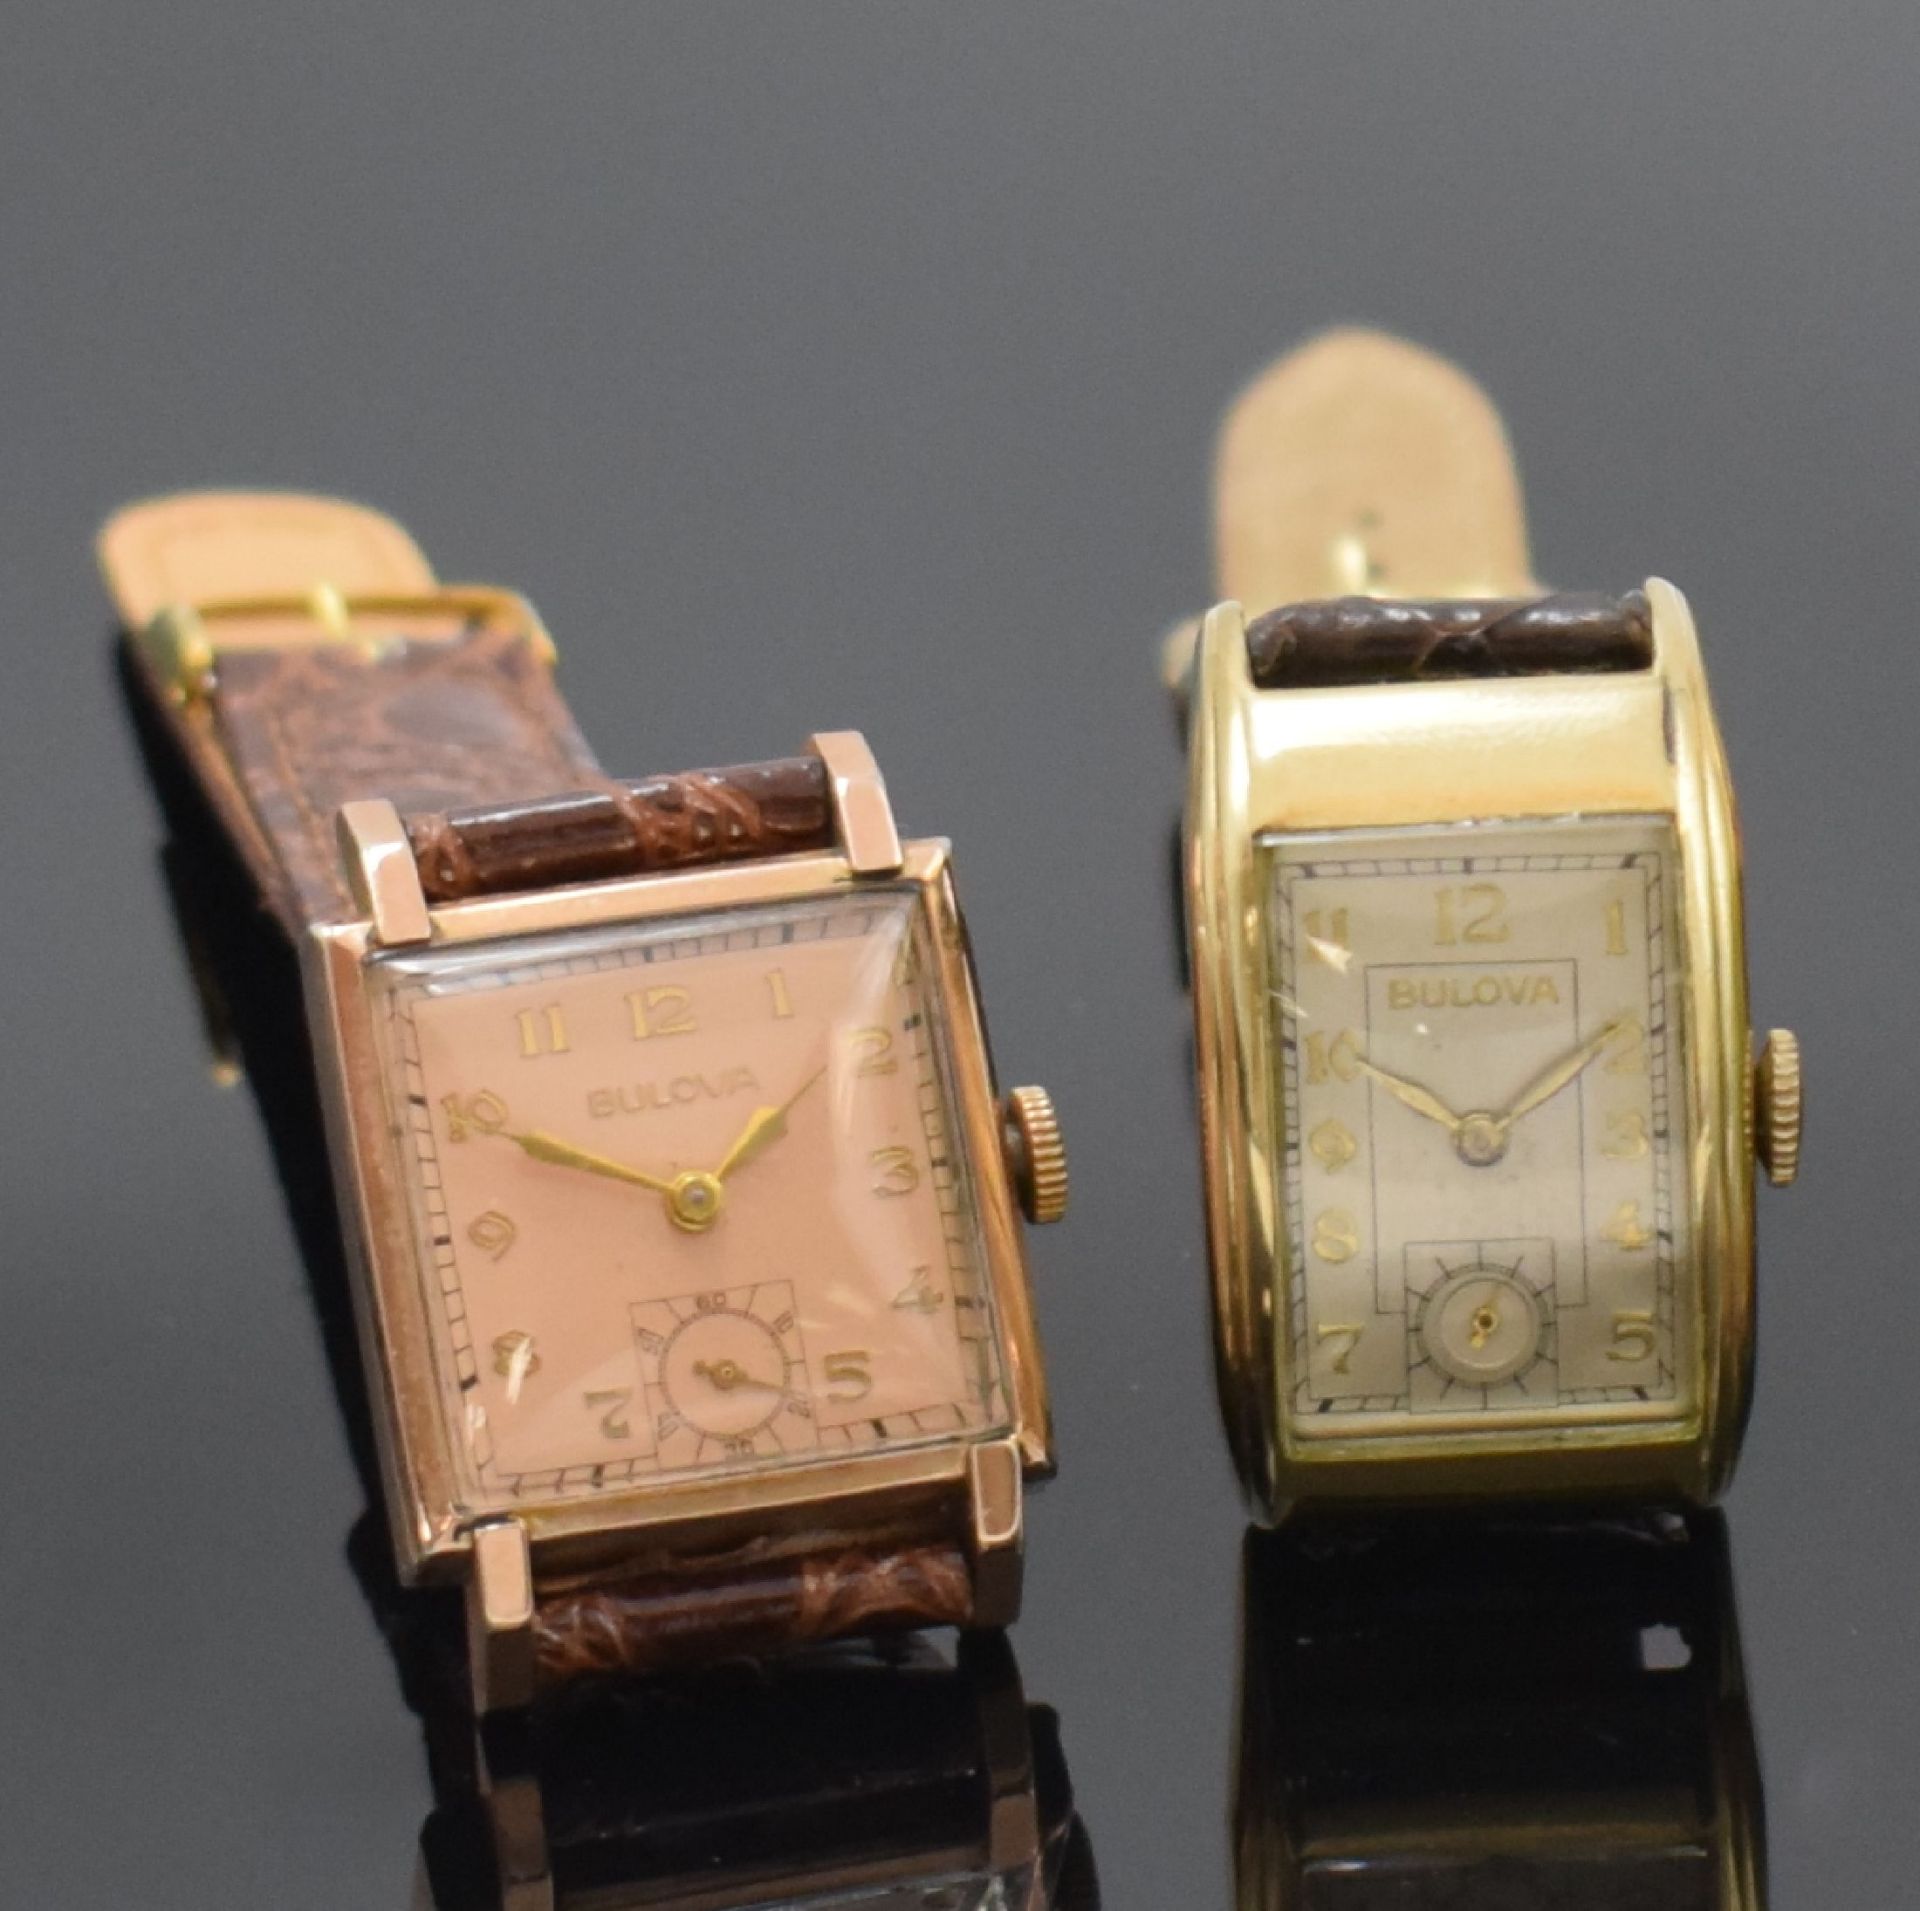 BULOVA Drivers und 3 weitere vergoldete Armbanduhren, USA - Image 3 of 9